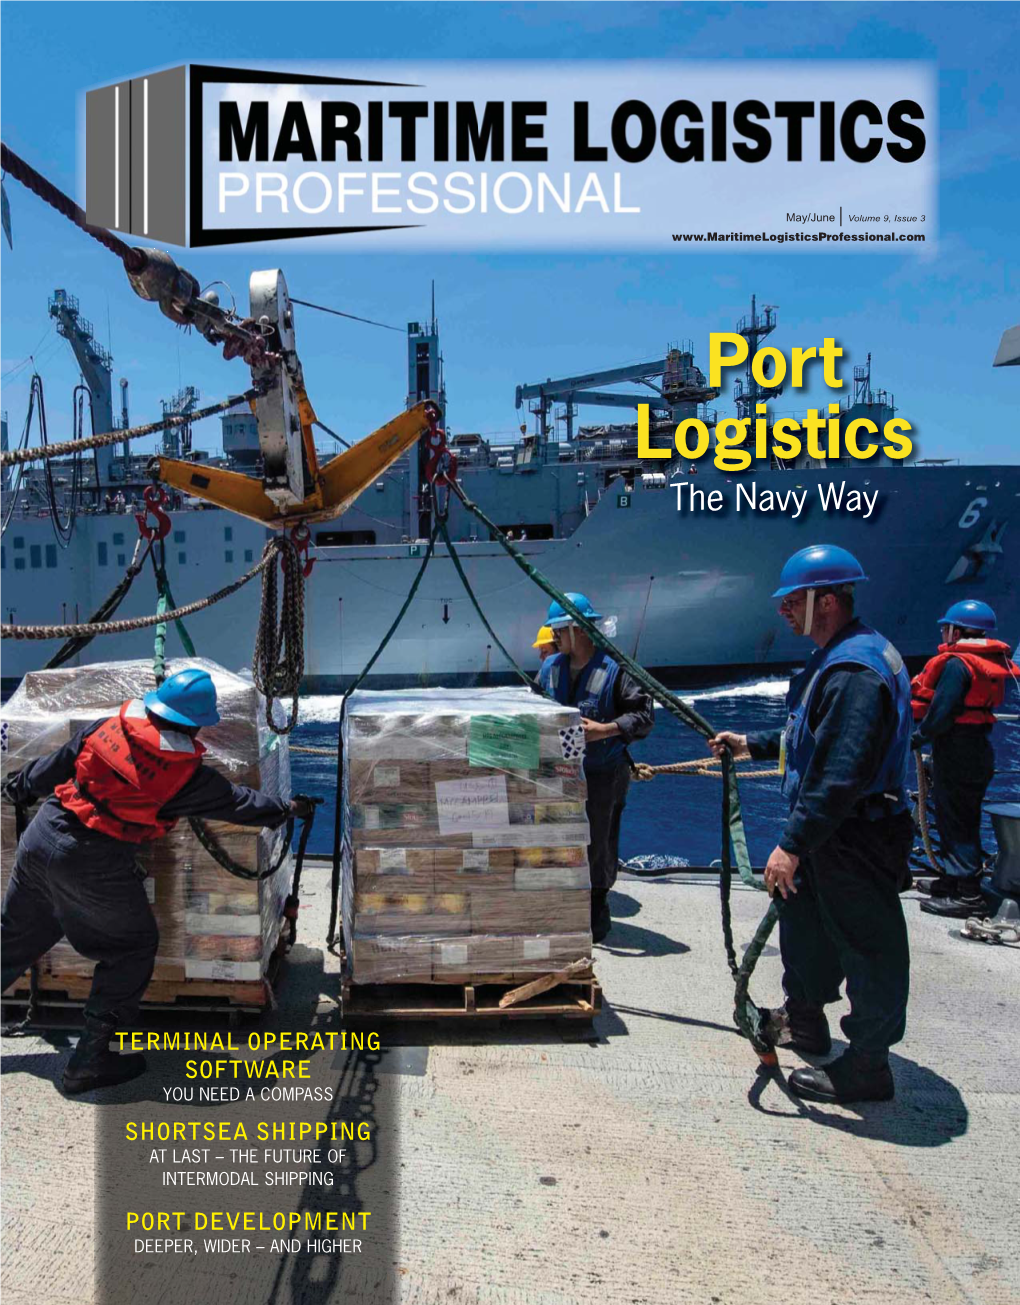 Port Logistics the Navy Way